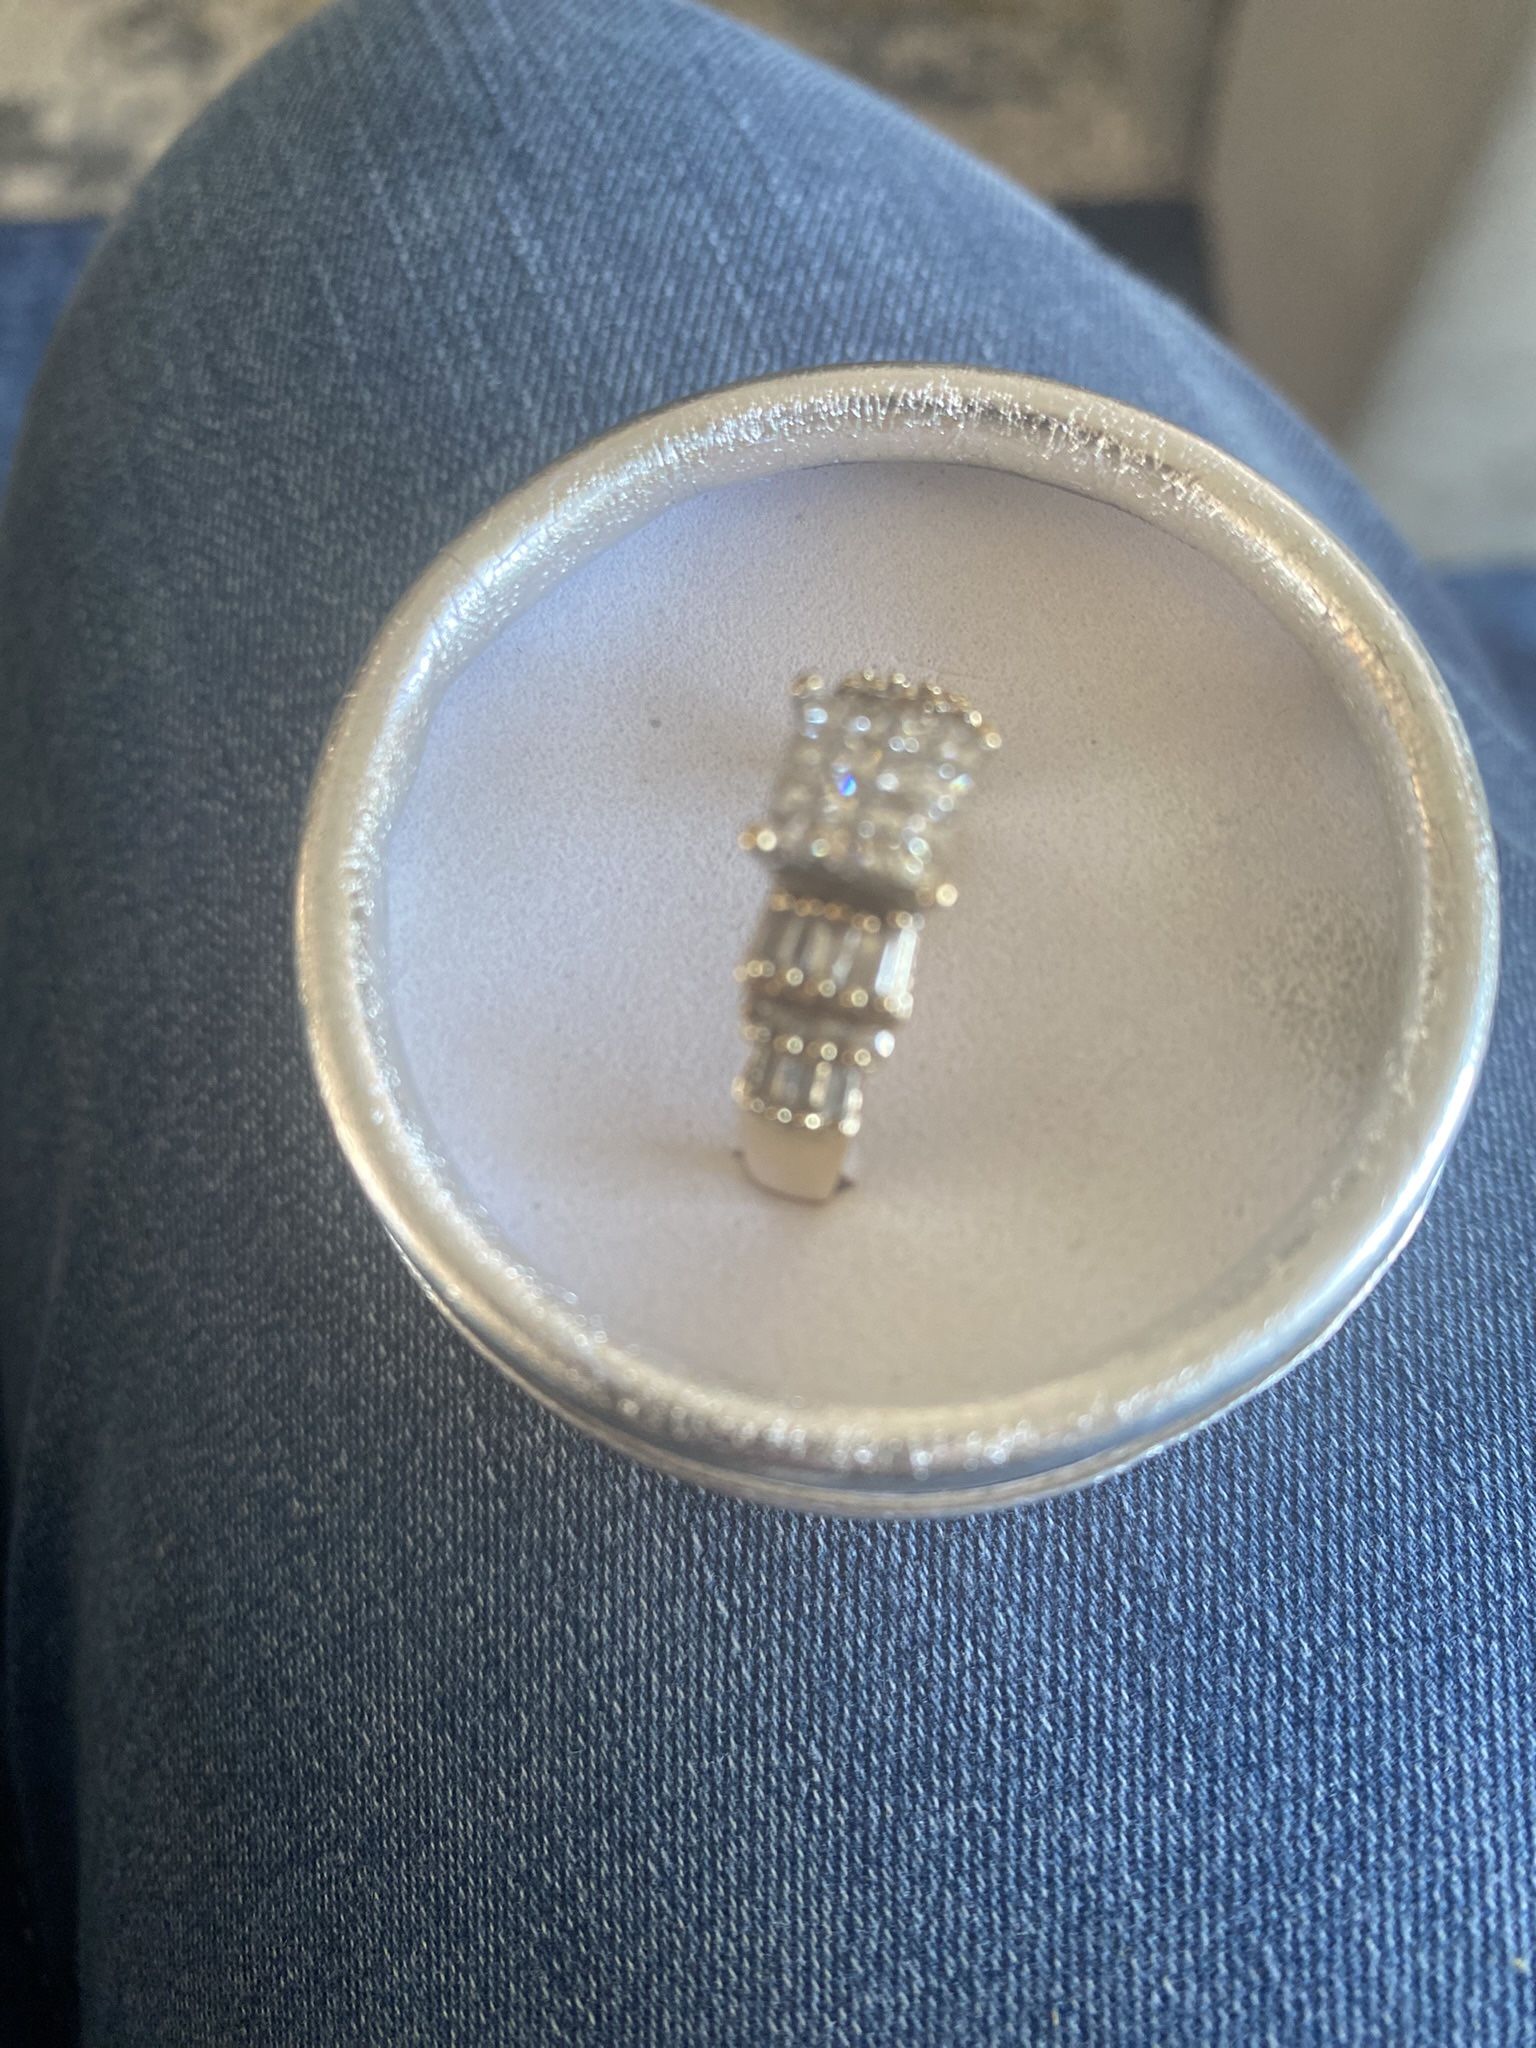 1 Carat Diamond ring I Upgraded